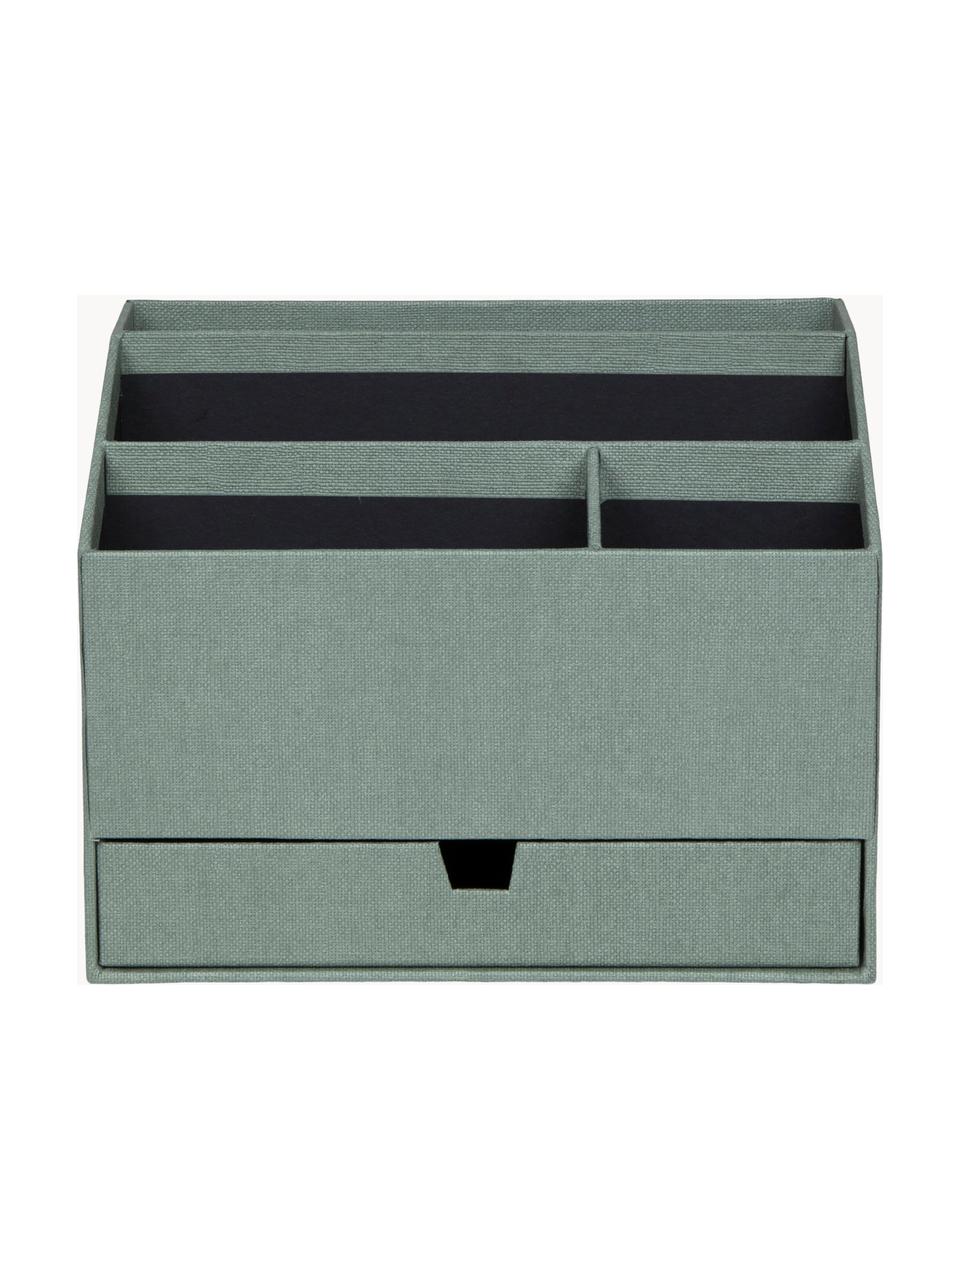 Büro-Organizer Greta, Fester, laminierter Karton, Salbeigrün, B 24 x T 16 cm